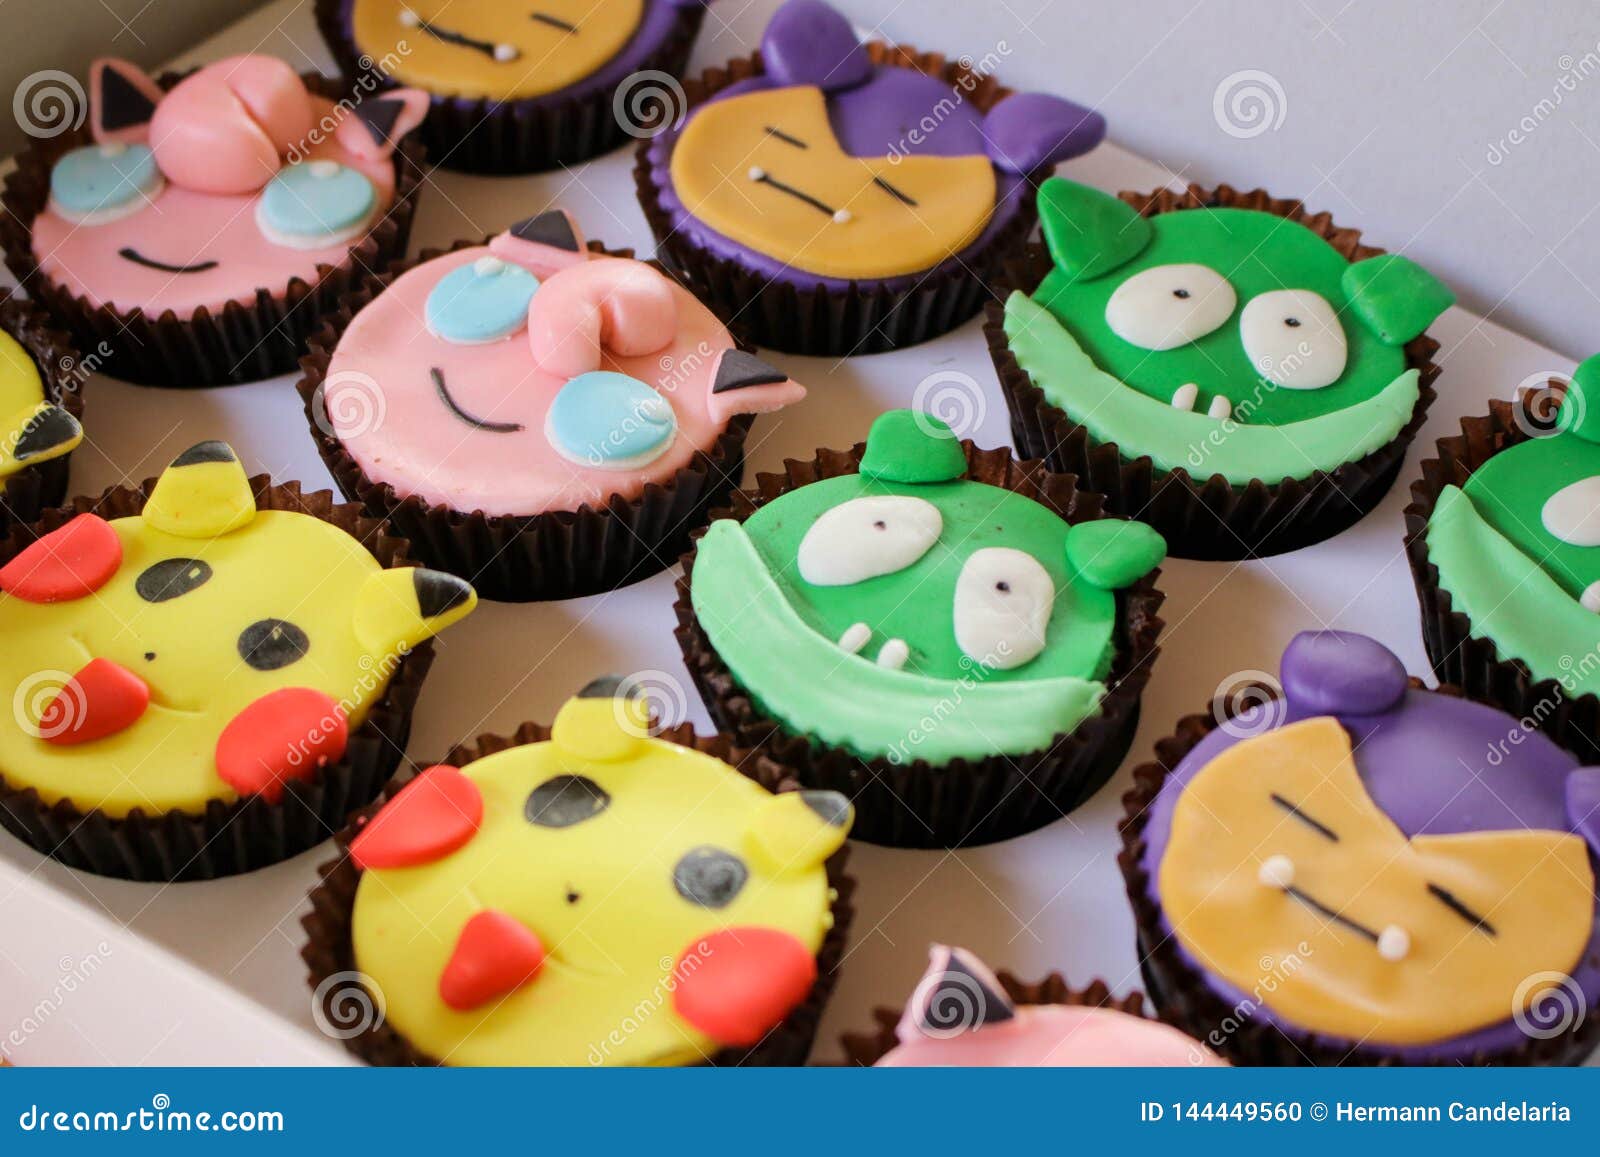 Cartoon Character Theme Birthday Cake Stock Photo - Image of greenfield